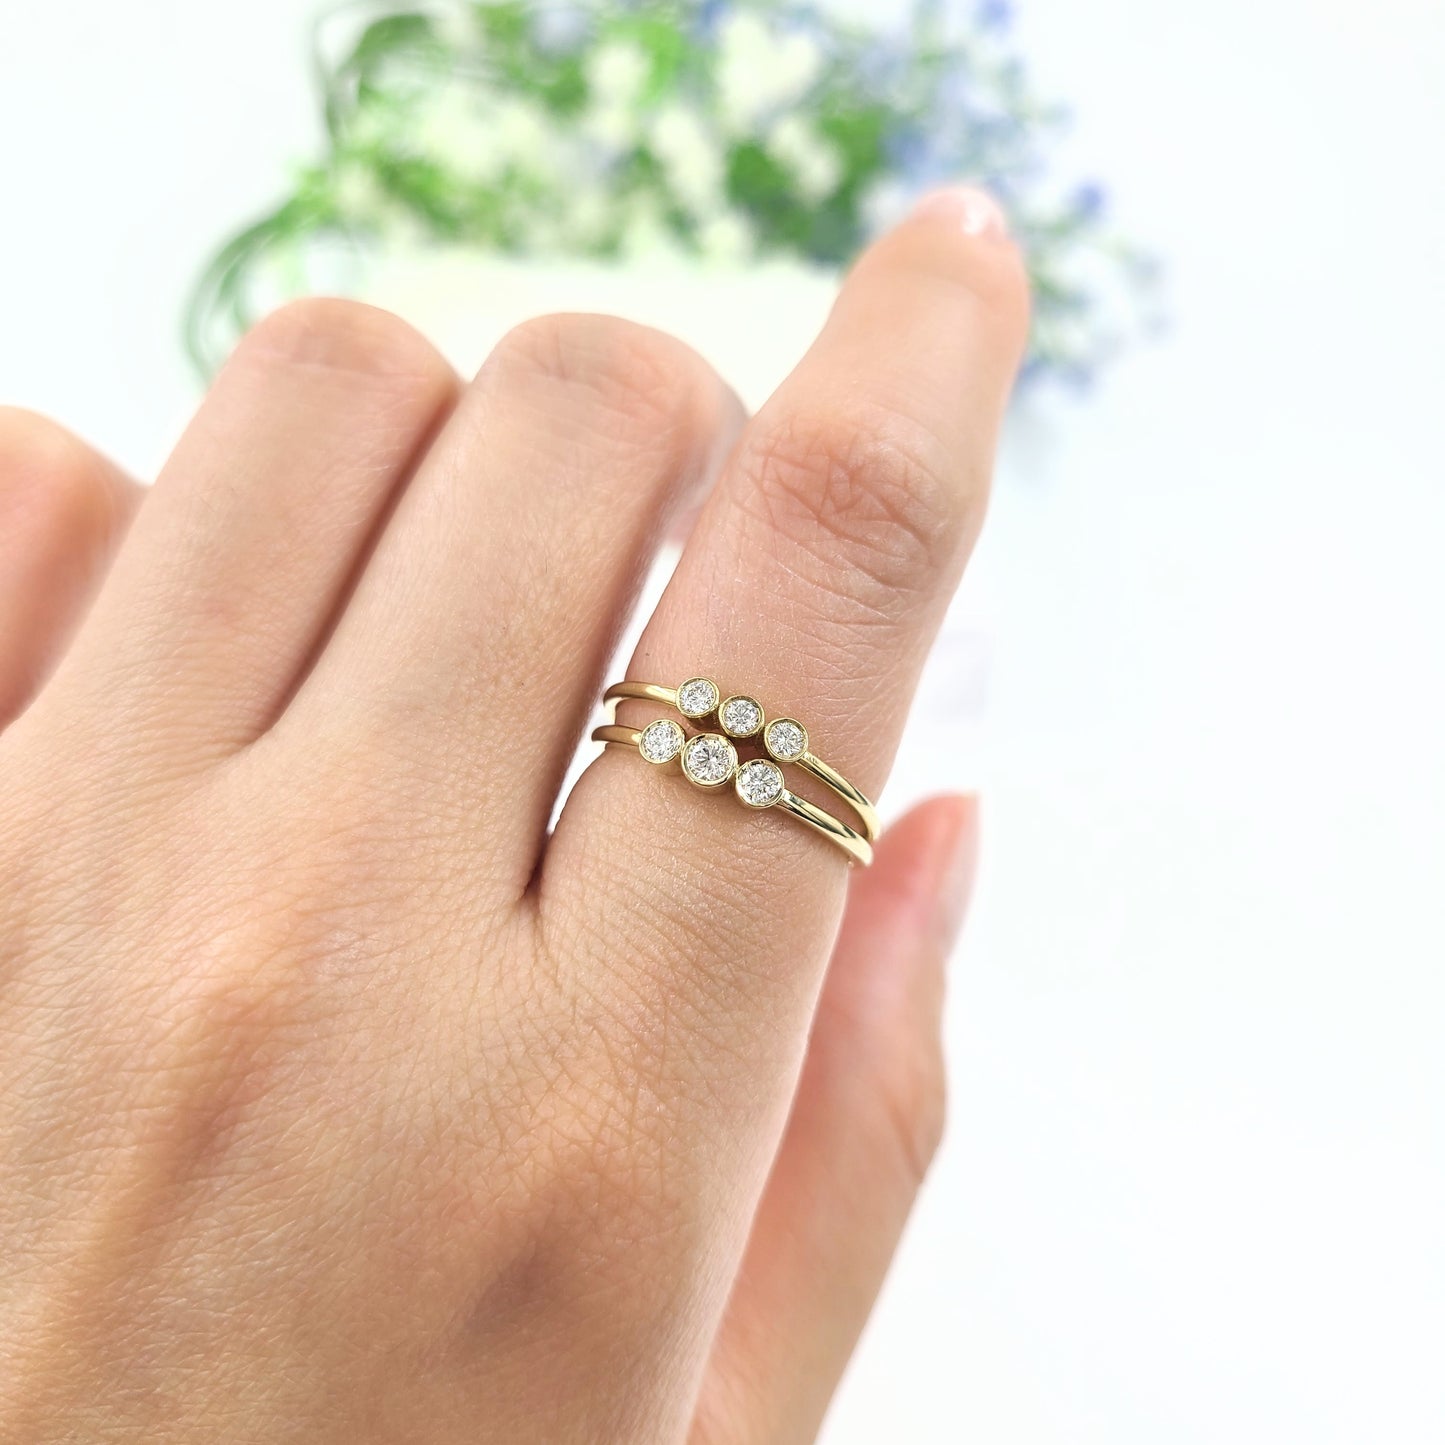 Stackable 0.1ct Diamond Ring/Trio Diamond Ring/Dainty Three Stone Bezel Setting Ring/Bezel set diamond band/Promise Ring/Engagement Ring